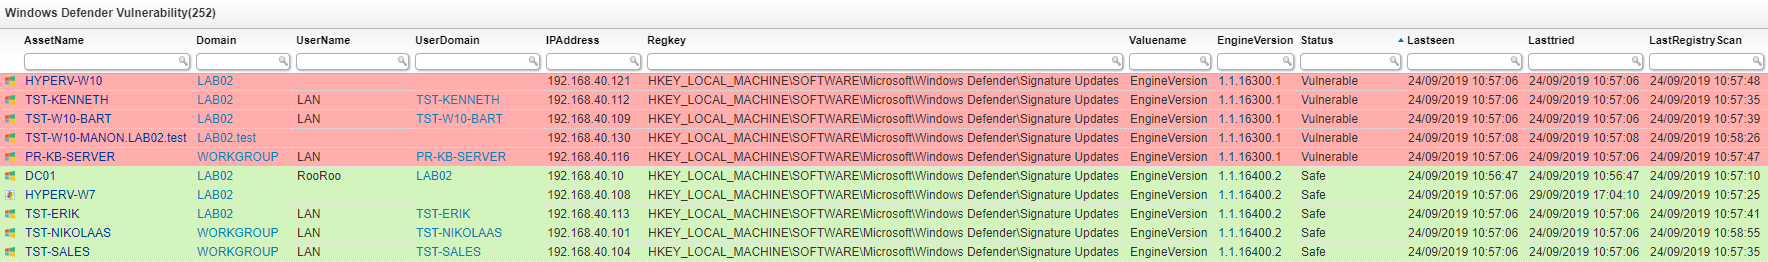 Windows Defender Vulnerability audit